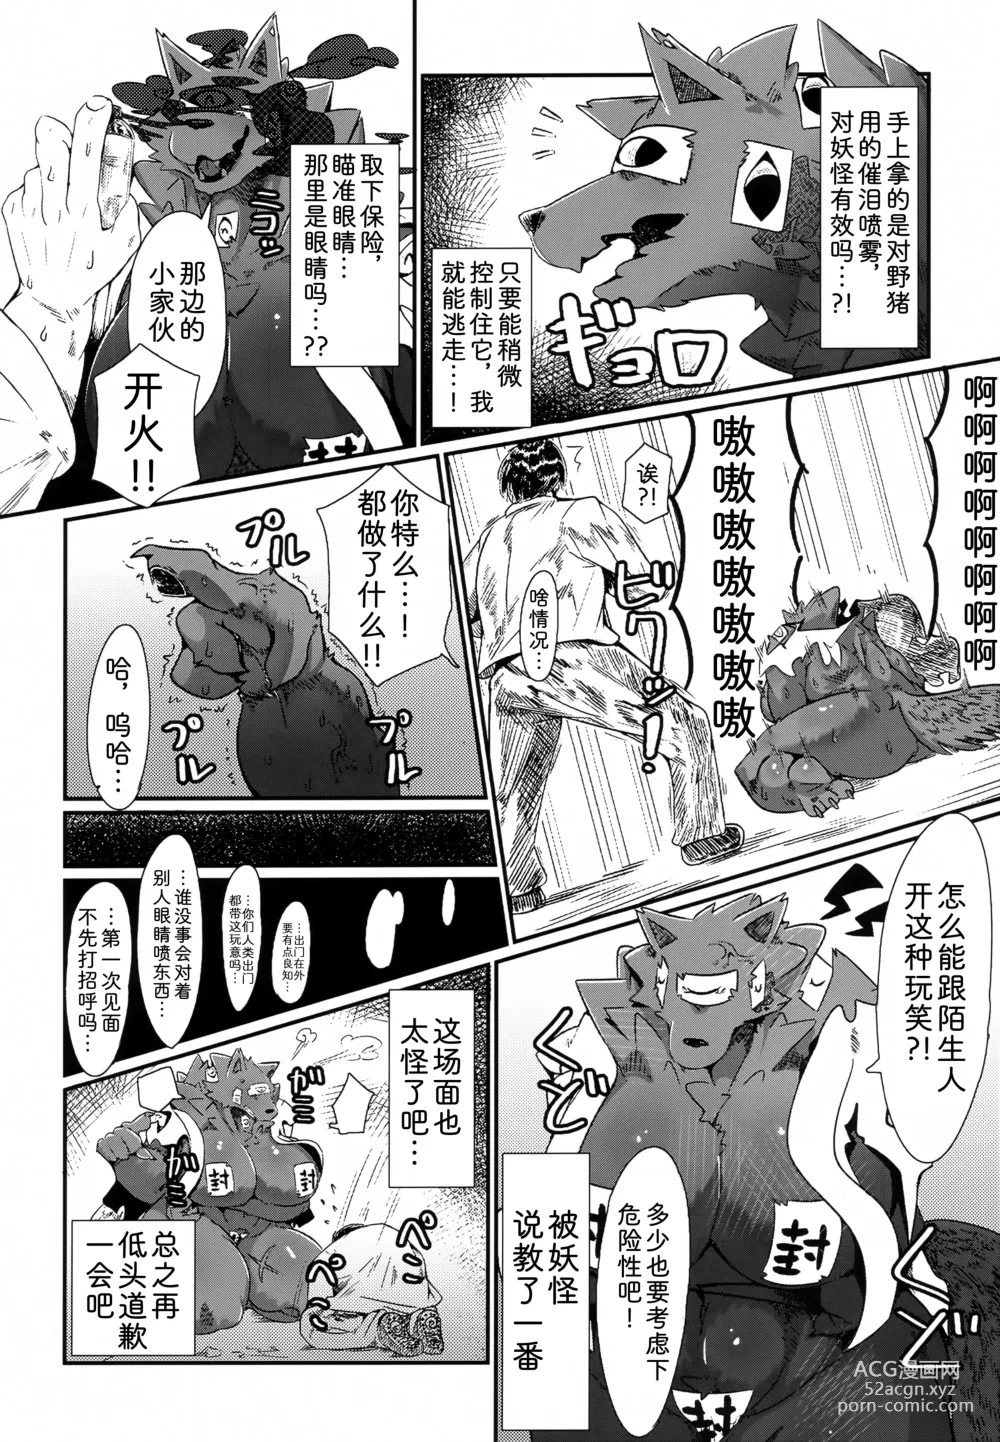 Page 5 of doujinshi 风鬟雾鬓，醉生梦死